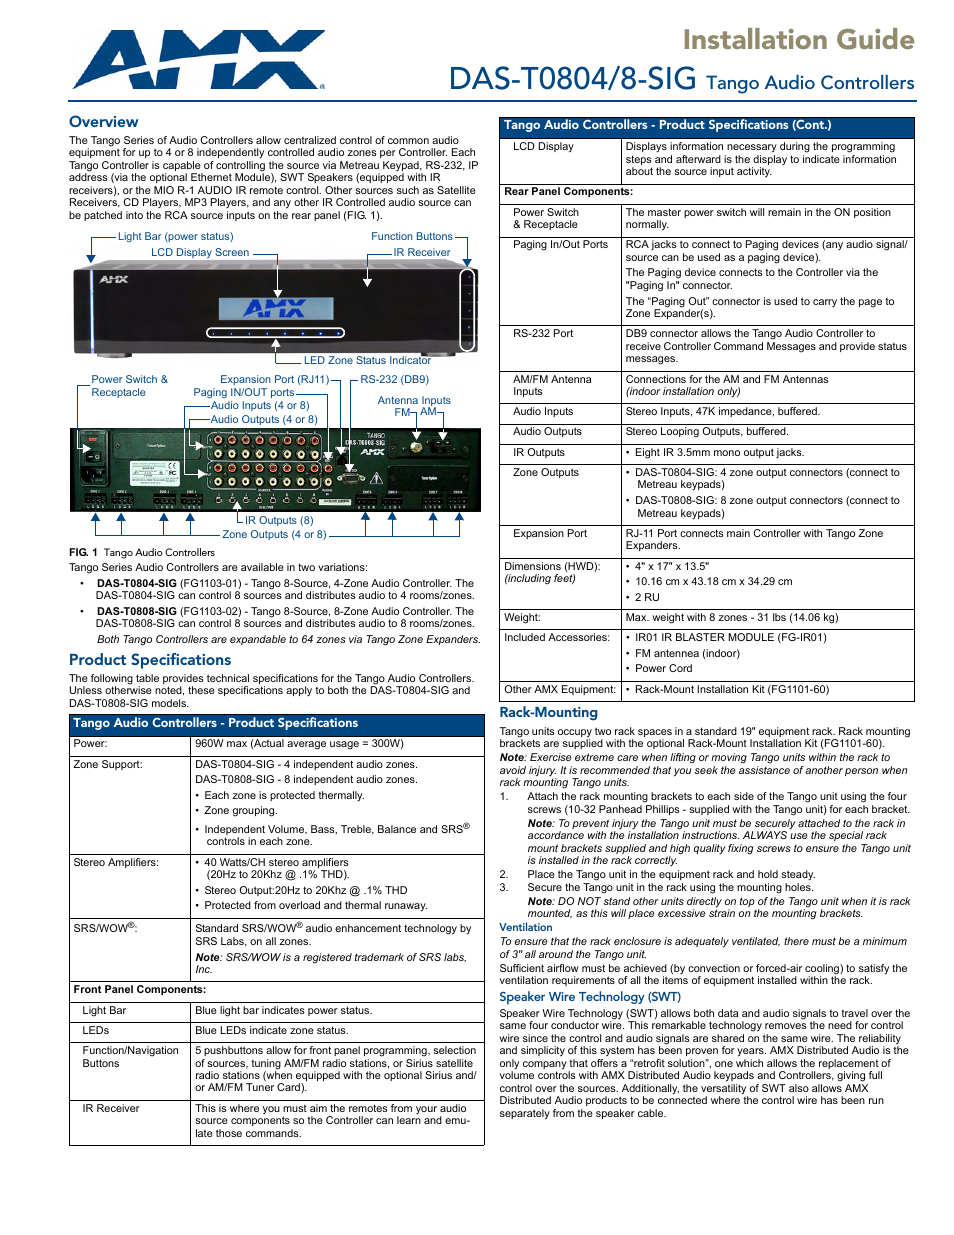 Tango Audio Controllers DAS-T0804/8-SIG